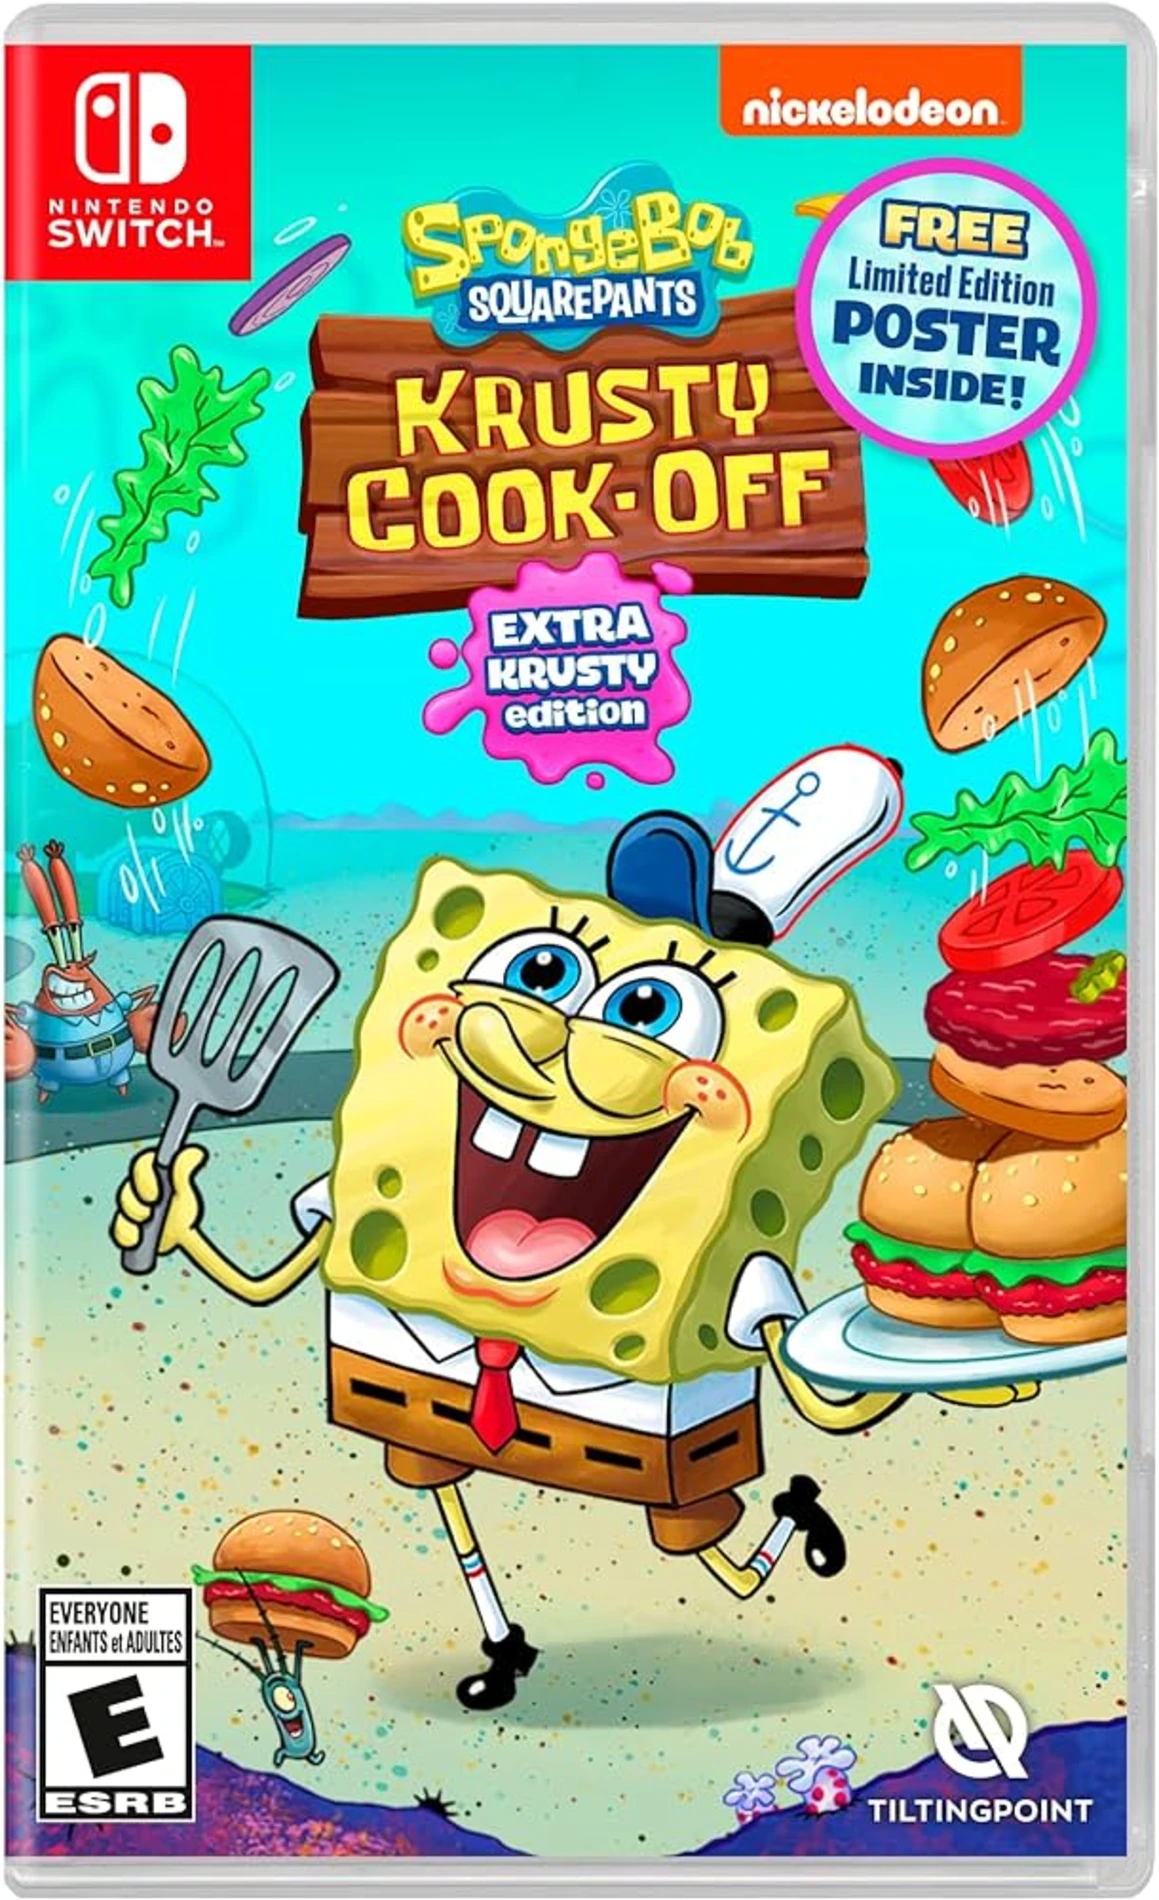   SpongeBob SquarePants : Krusty Cook-Off Extra Krusty Edition - Nintendo Switch Oyun [SIFIR]